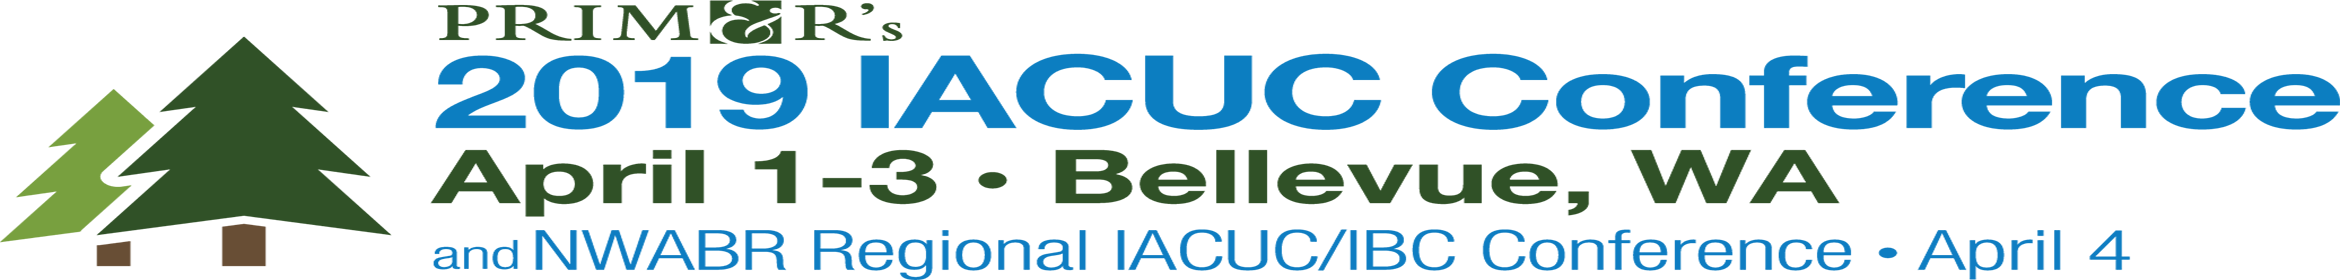 IACUC 2019 Main banner